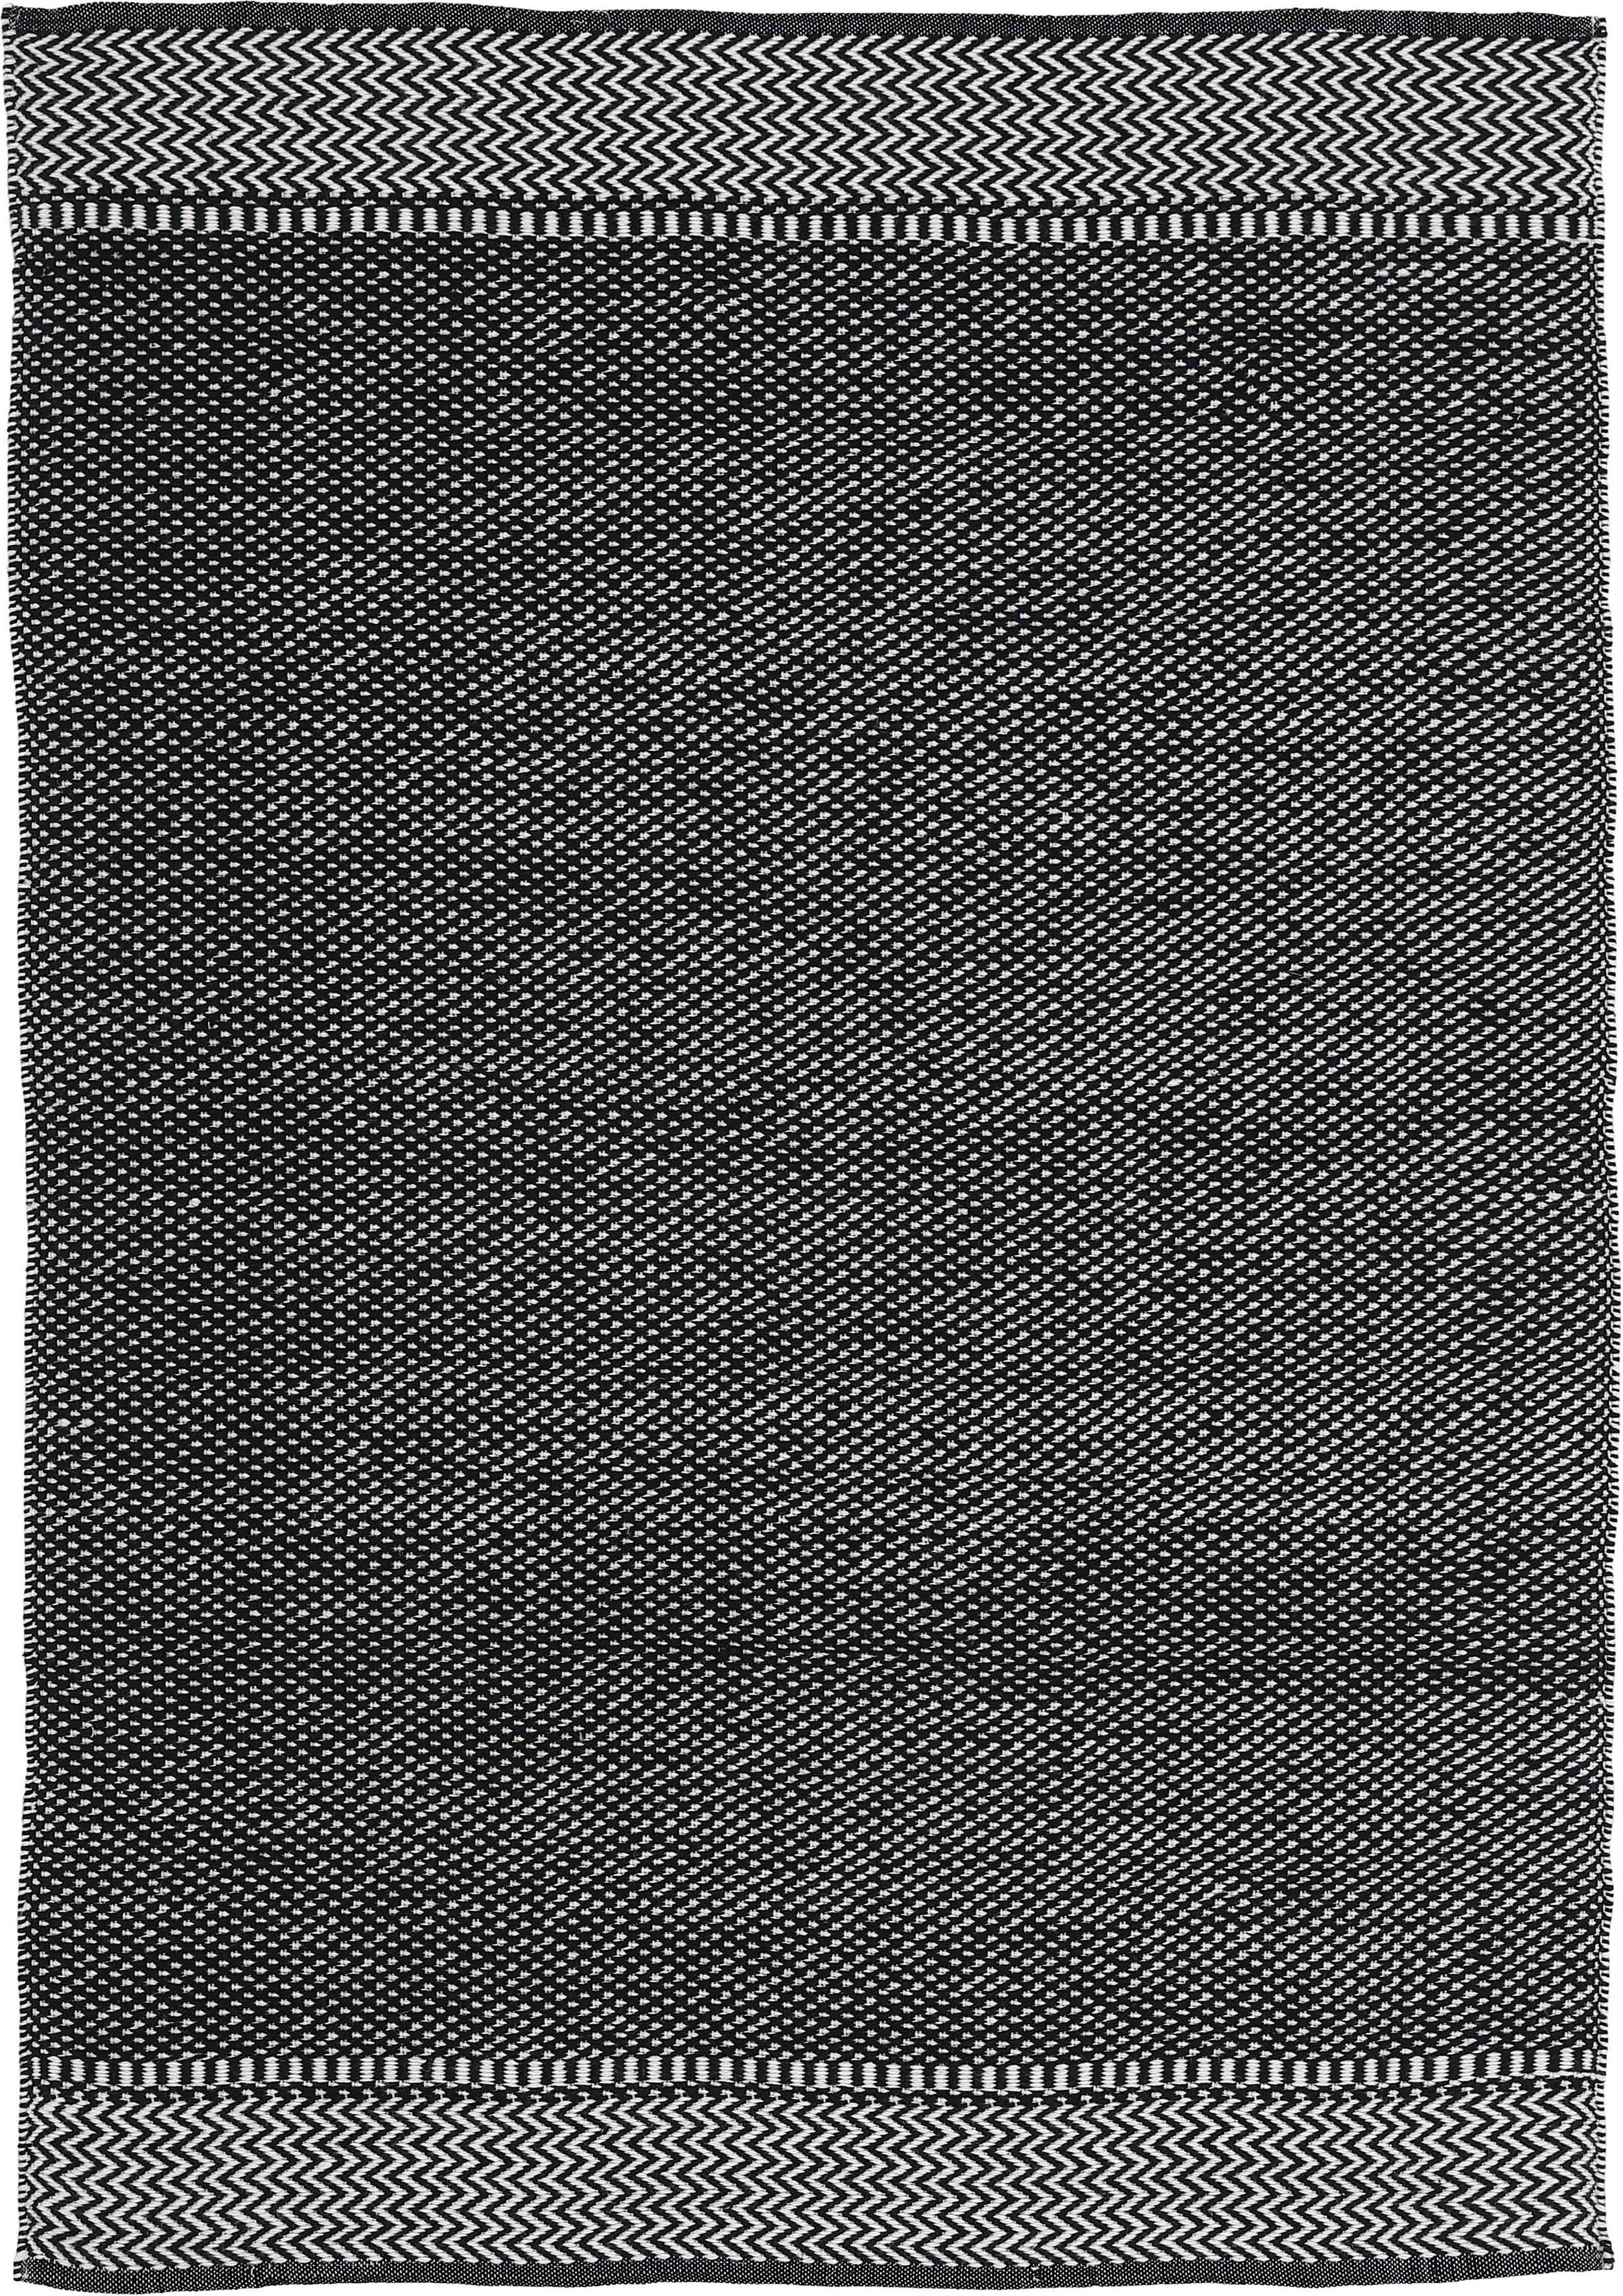 Teppich Frida 205, carpetfine, rechteckig, Höhe: 7 mm, Wendeteppich, 100% recyceltem Material (PET), Flachgewebe, Sisal Optik schwarz | Kurzflor-Teppiche